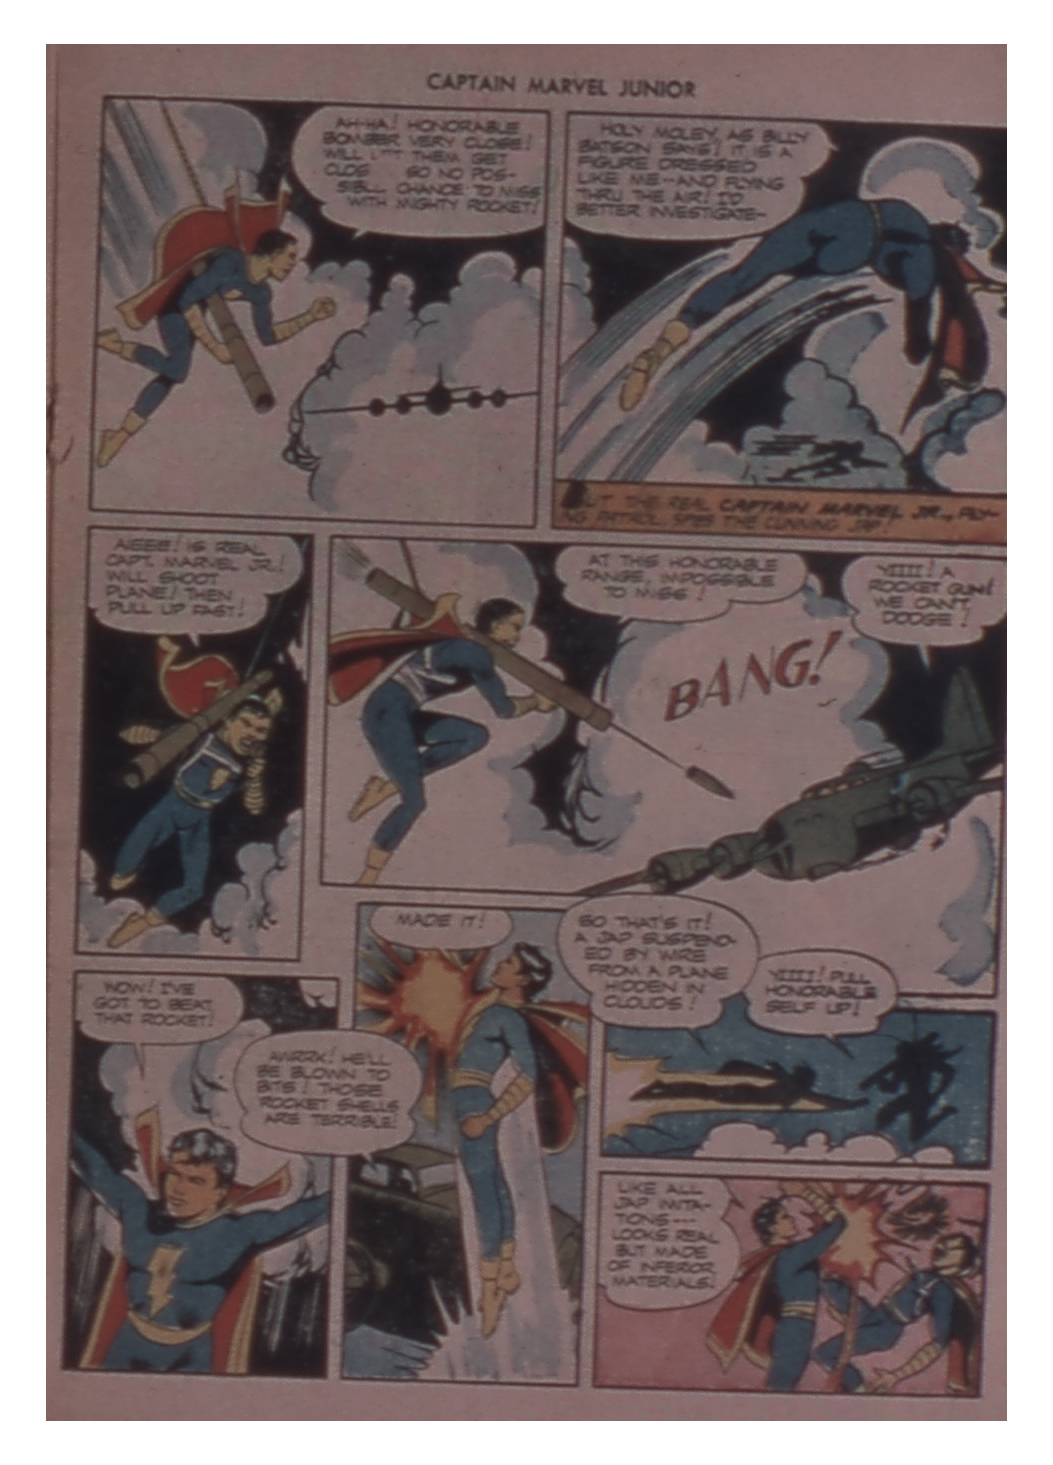 Read online Captain Marvel, Jr. comic -  Issue #28 - 19